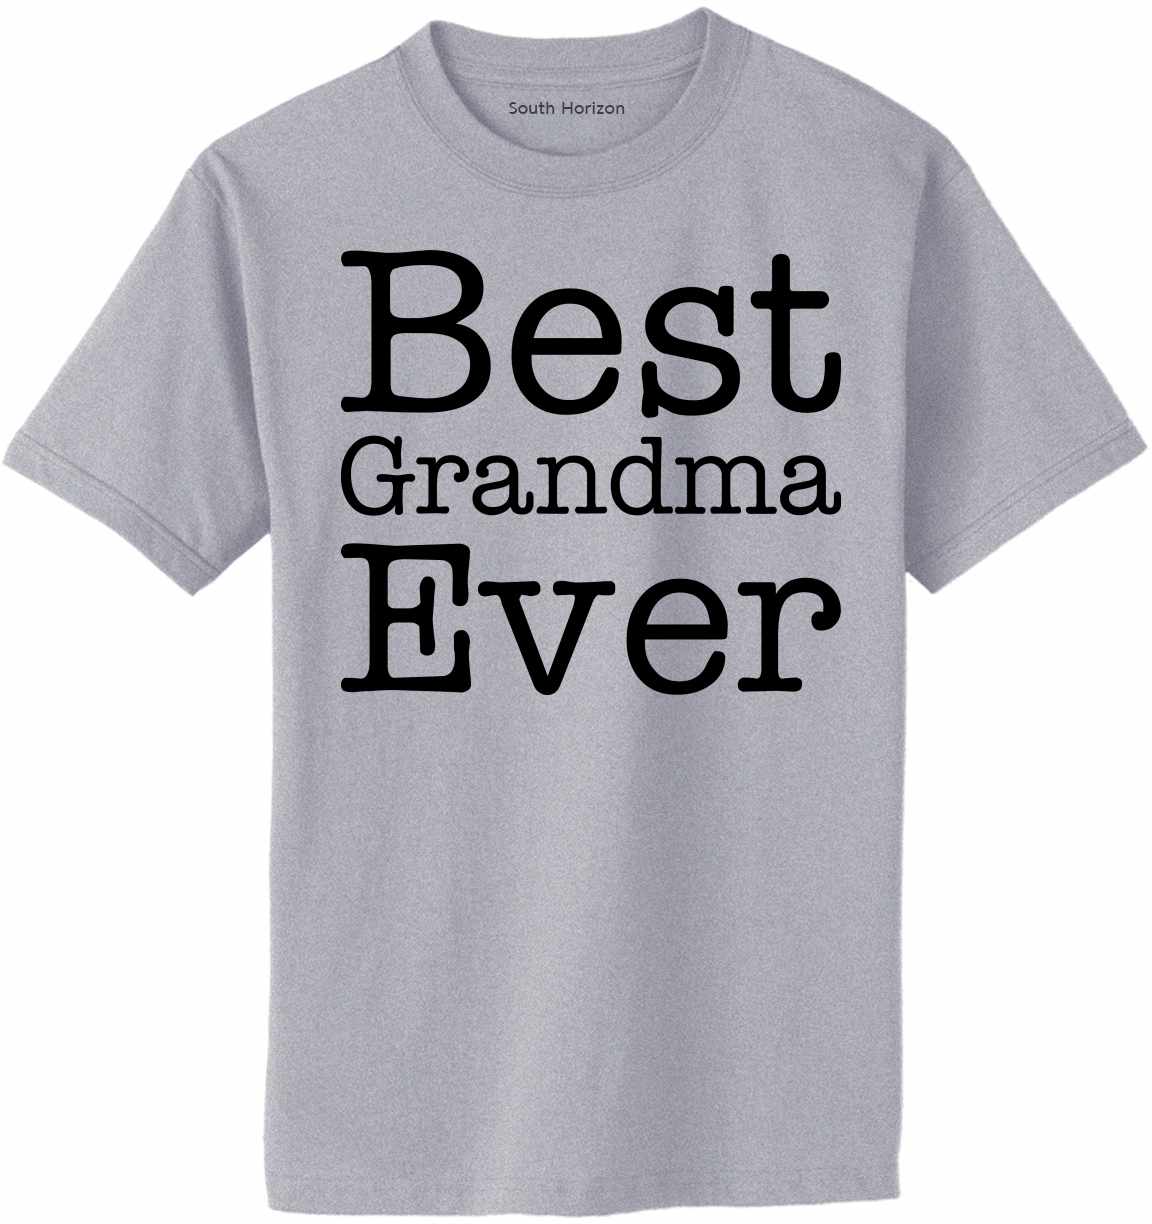 Best Grandma Ever Adult T-Shirt (#866-1)